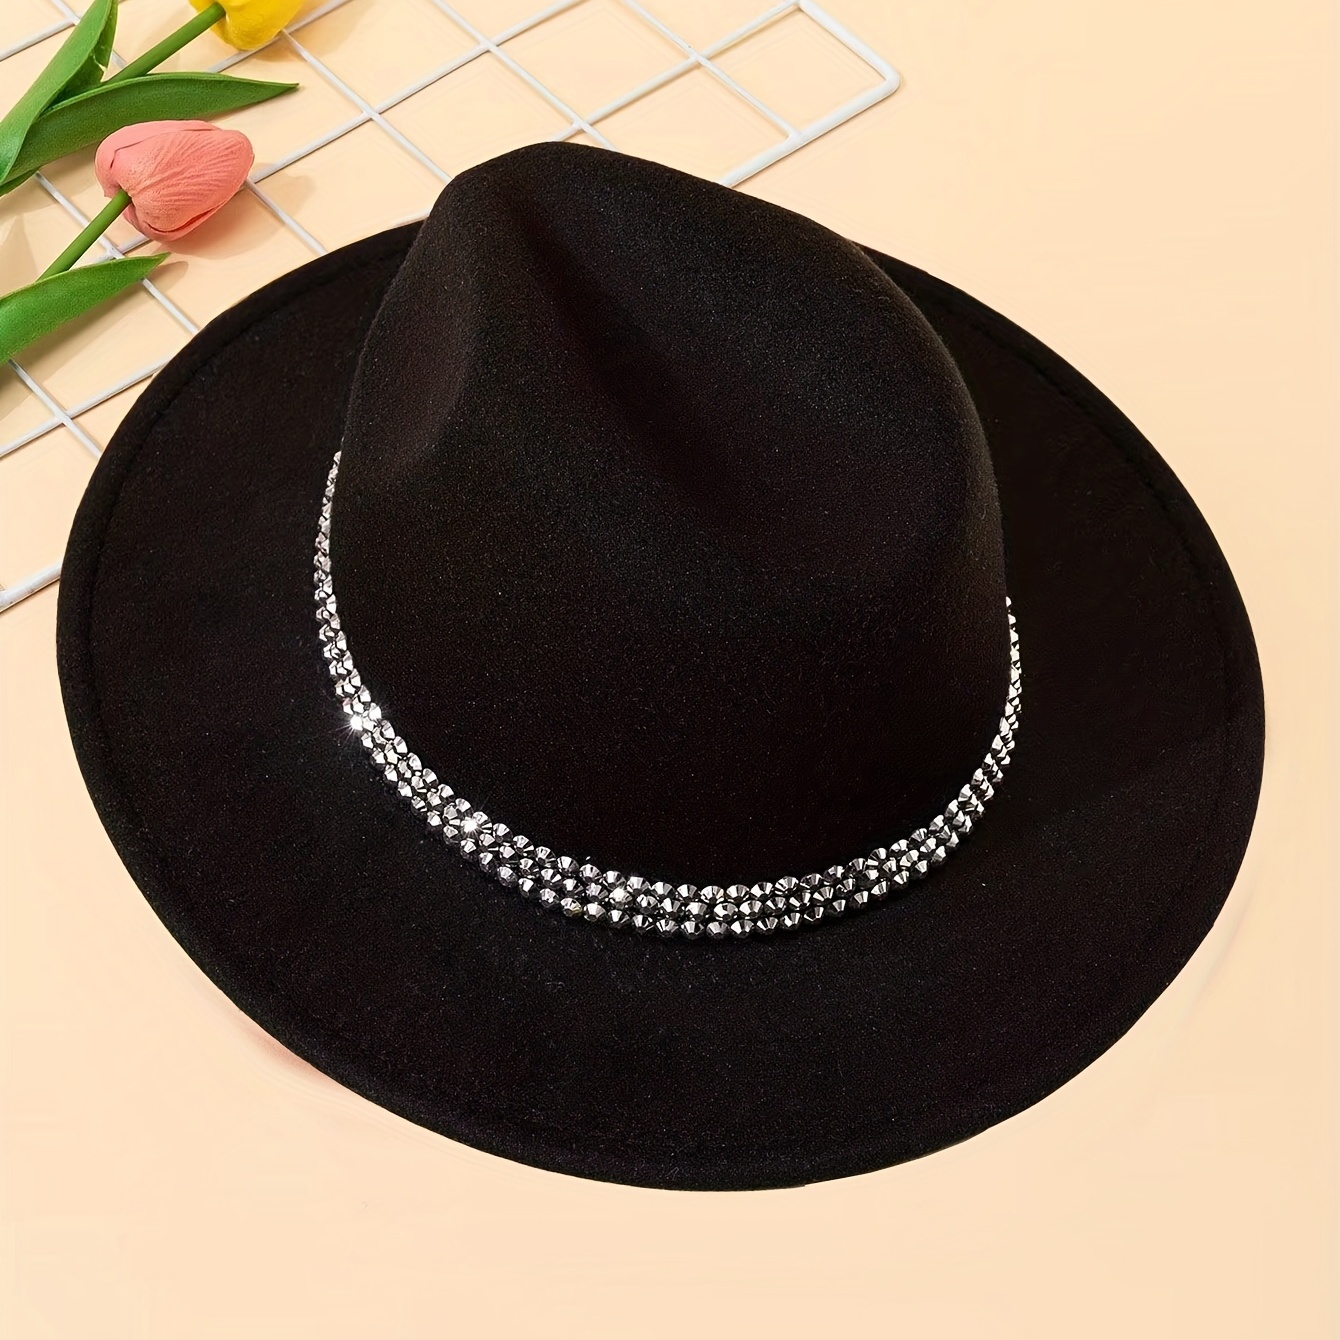 Black Flat Brim Jazz Hat with Rhinestone Strap Decor for Women and Men